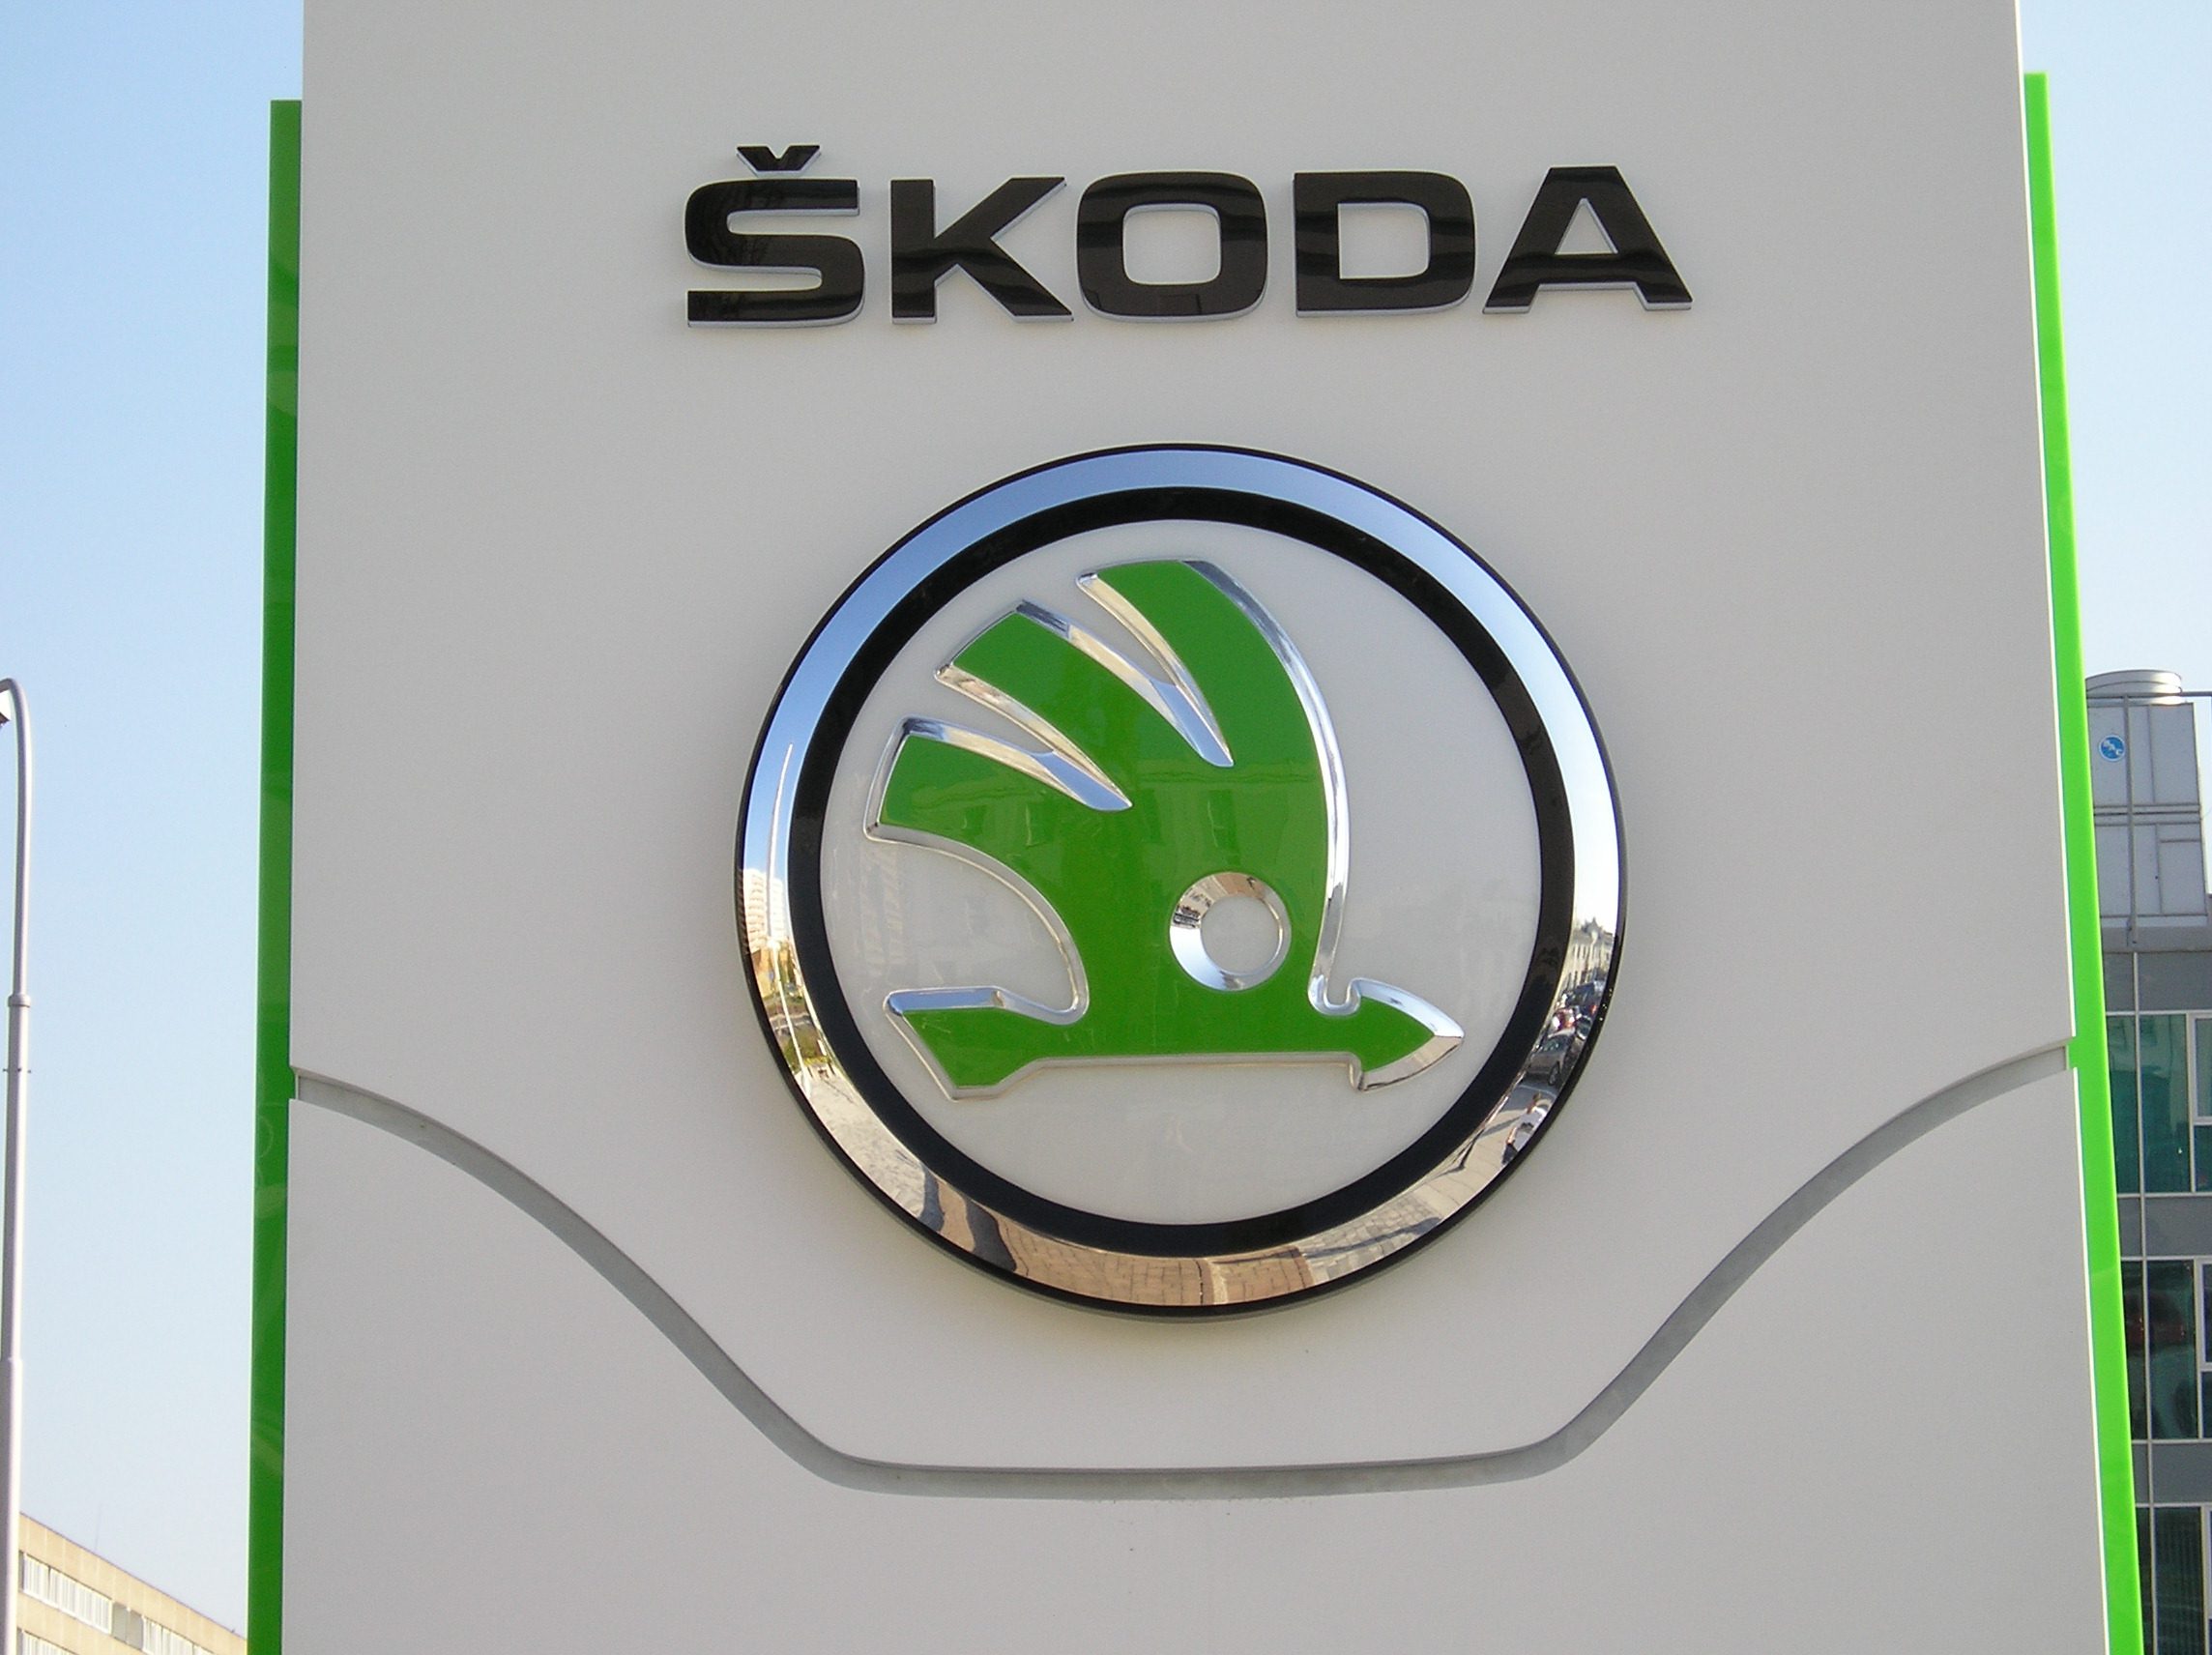 File:New Škoda logo.JPG - Wikimedia Commons